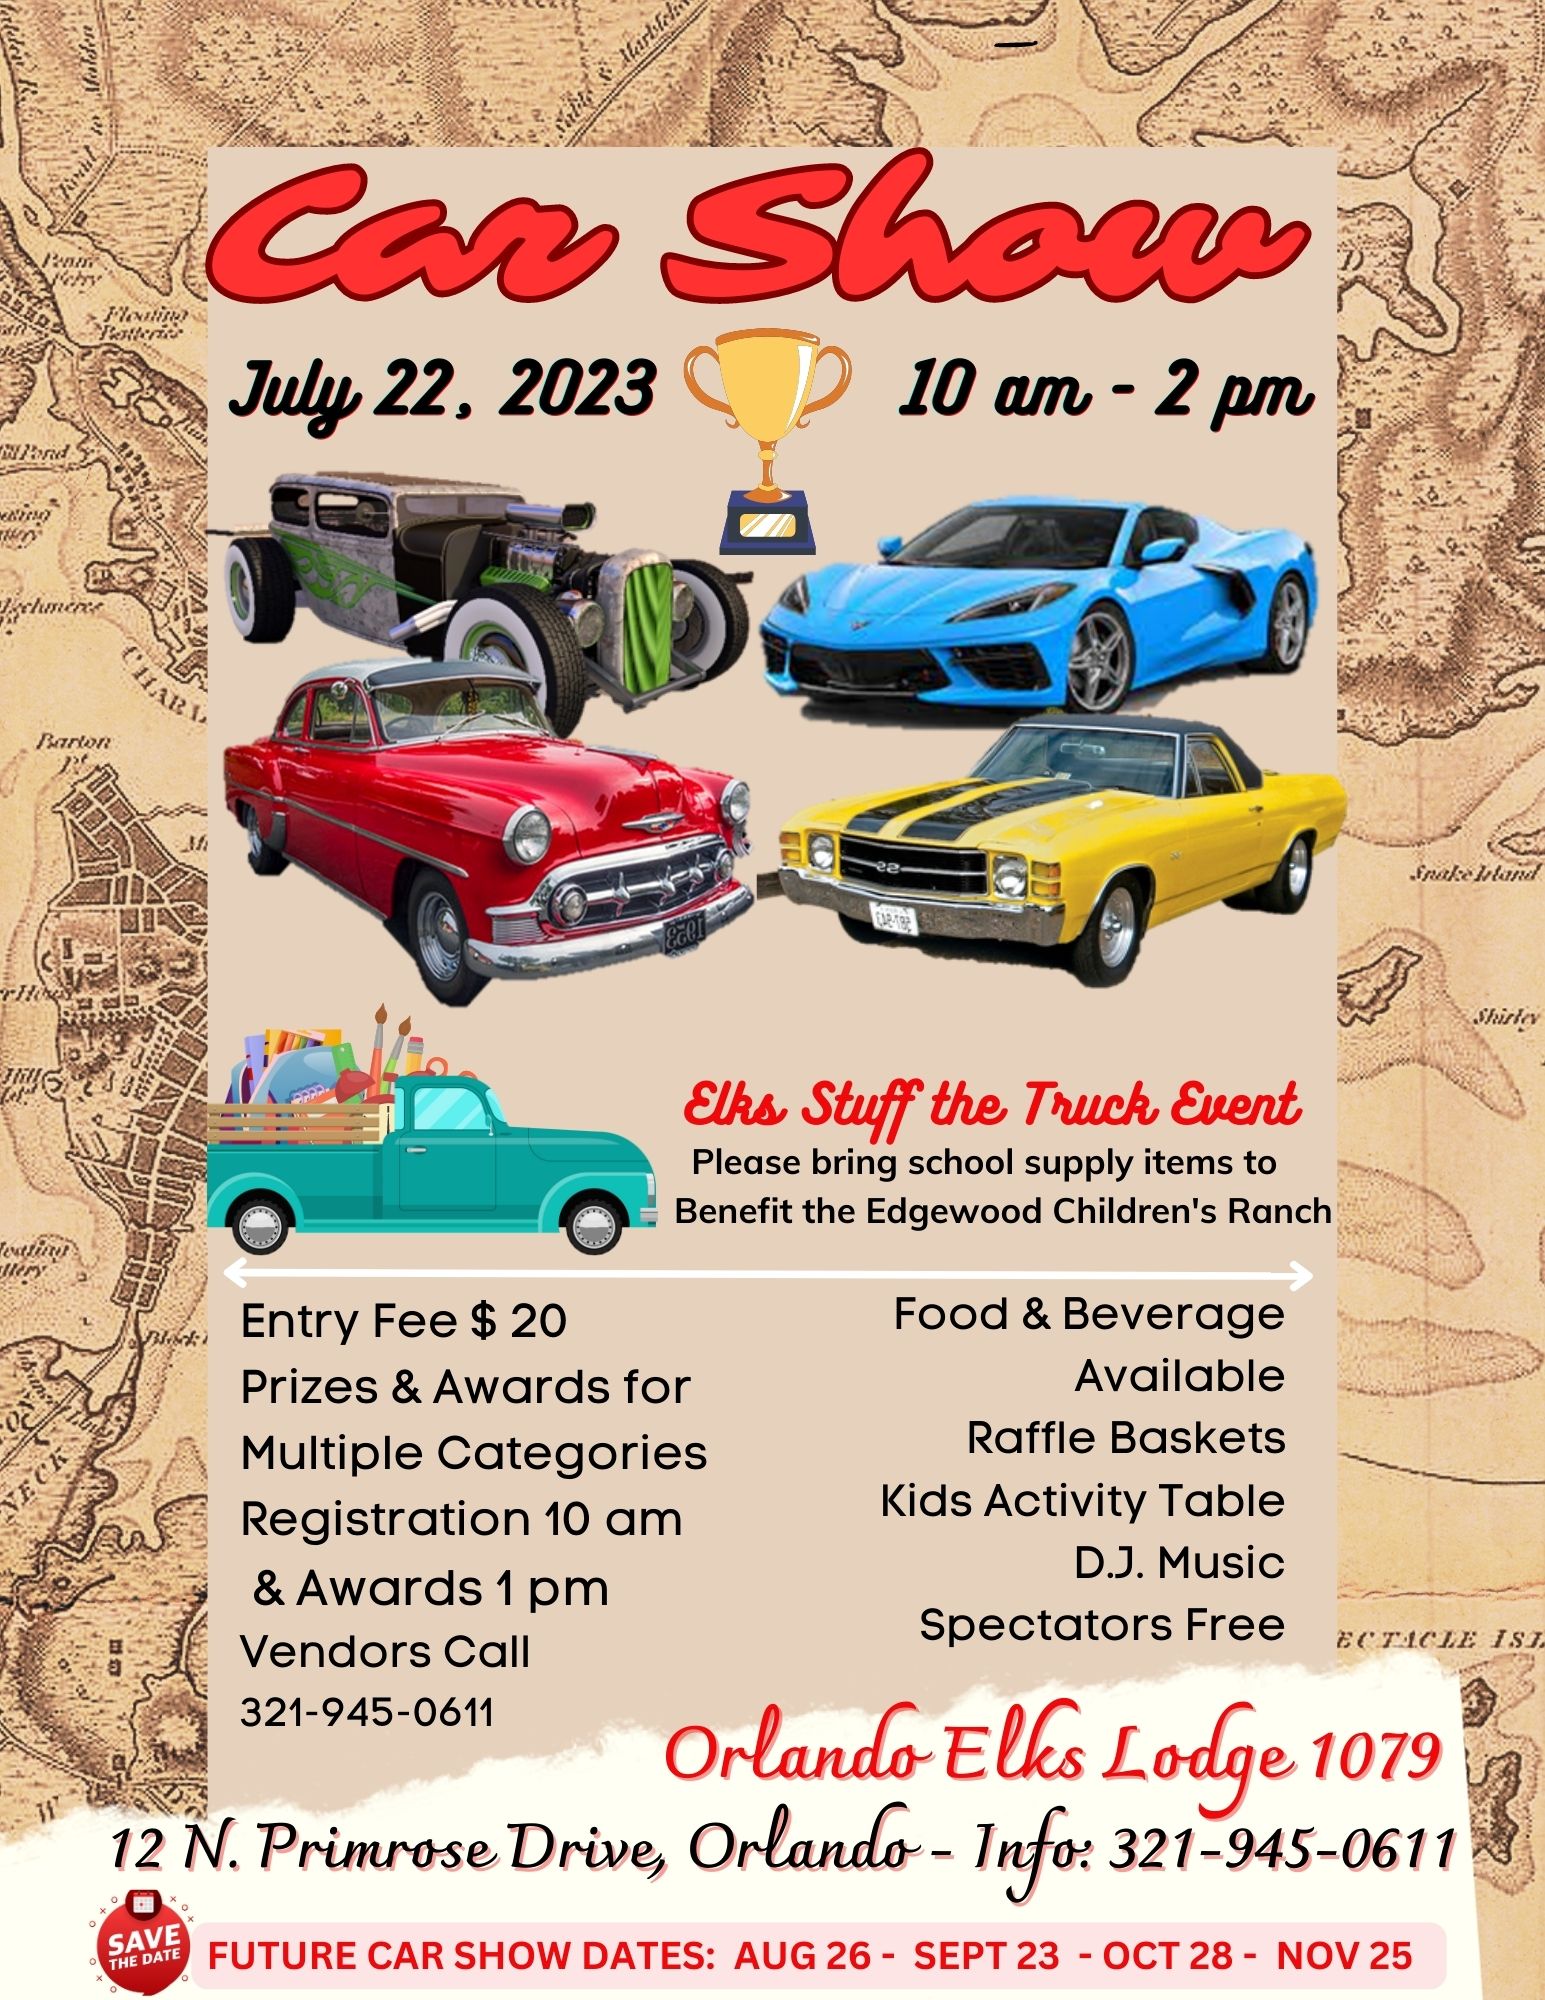 July 22 Saturday Car Show Orlando Florida Elks Lodge 1079